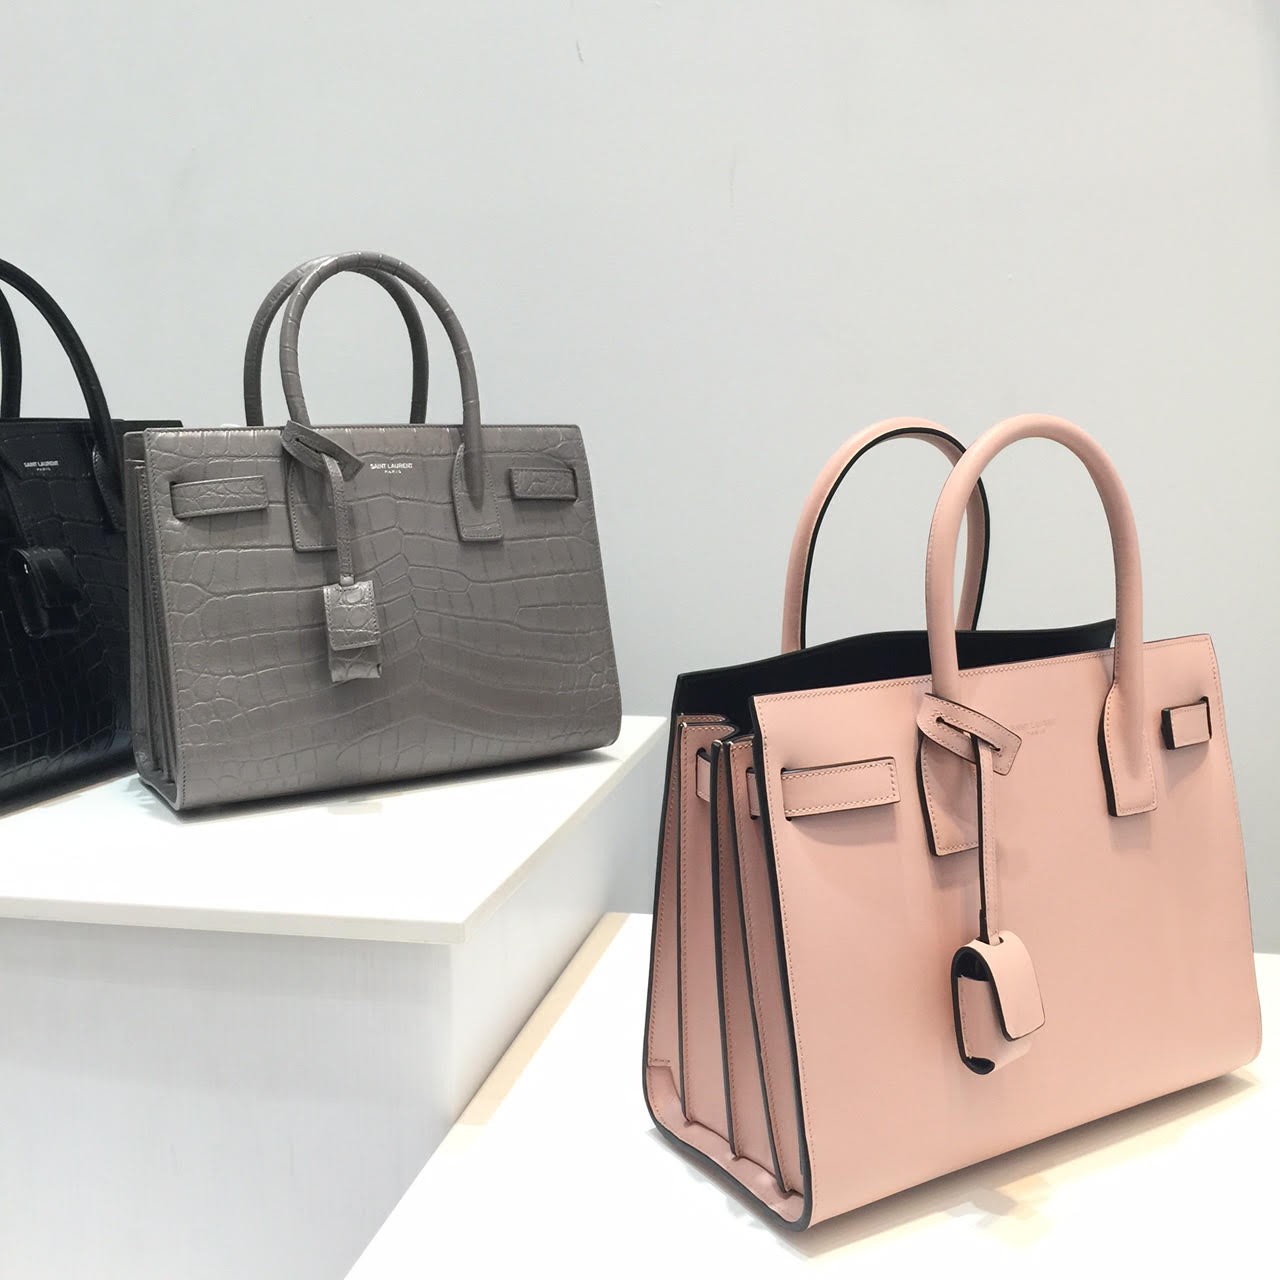 Reebonz Final Clearance Sale - Handbags - Fashion - Sales & Deals